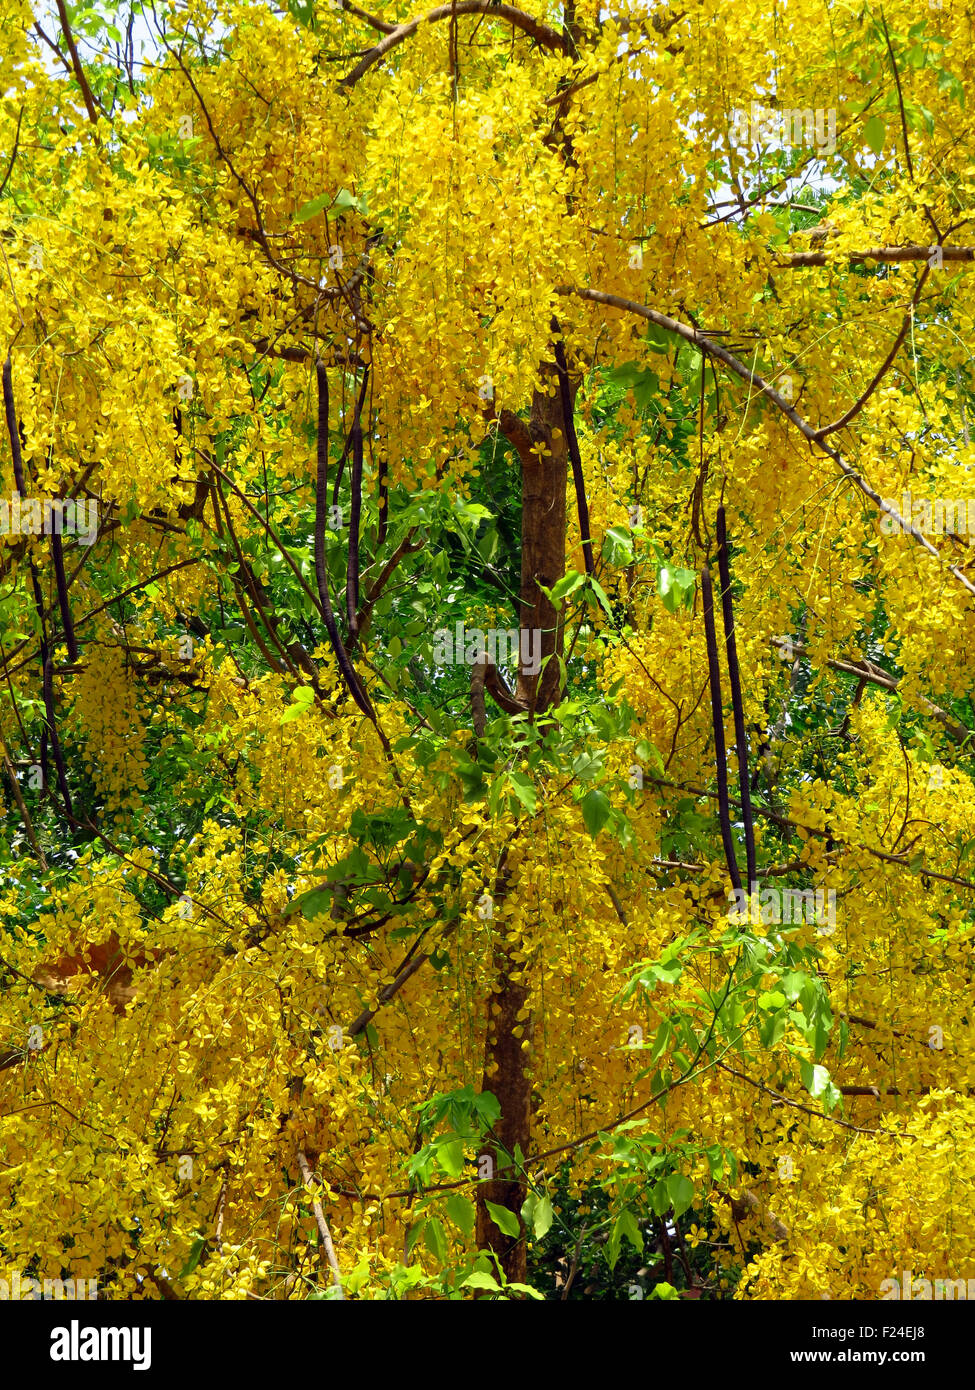 Cabaña De Ducha Dorada De Cassia De Fístula O árbol De Pudín O Flor  Amarilla Imagen de archivo - Imagen de verde, nube: 277740205